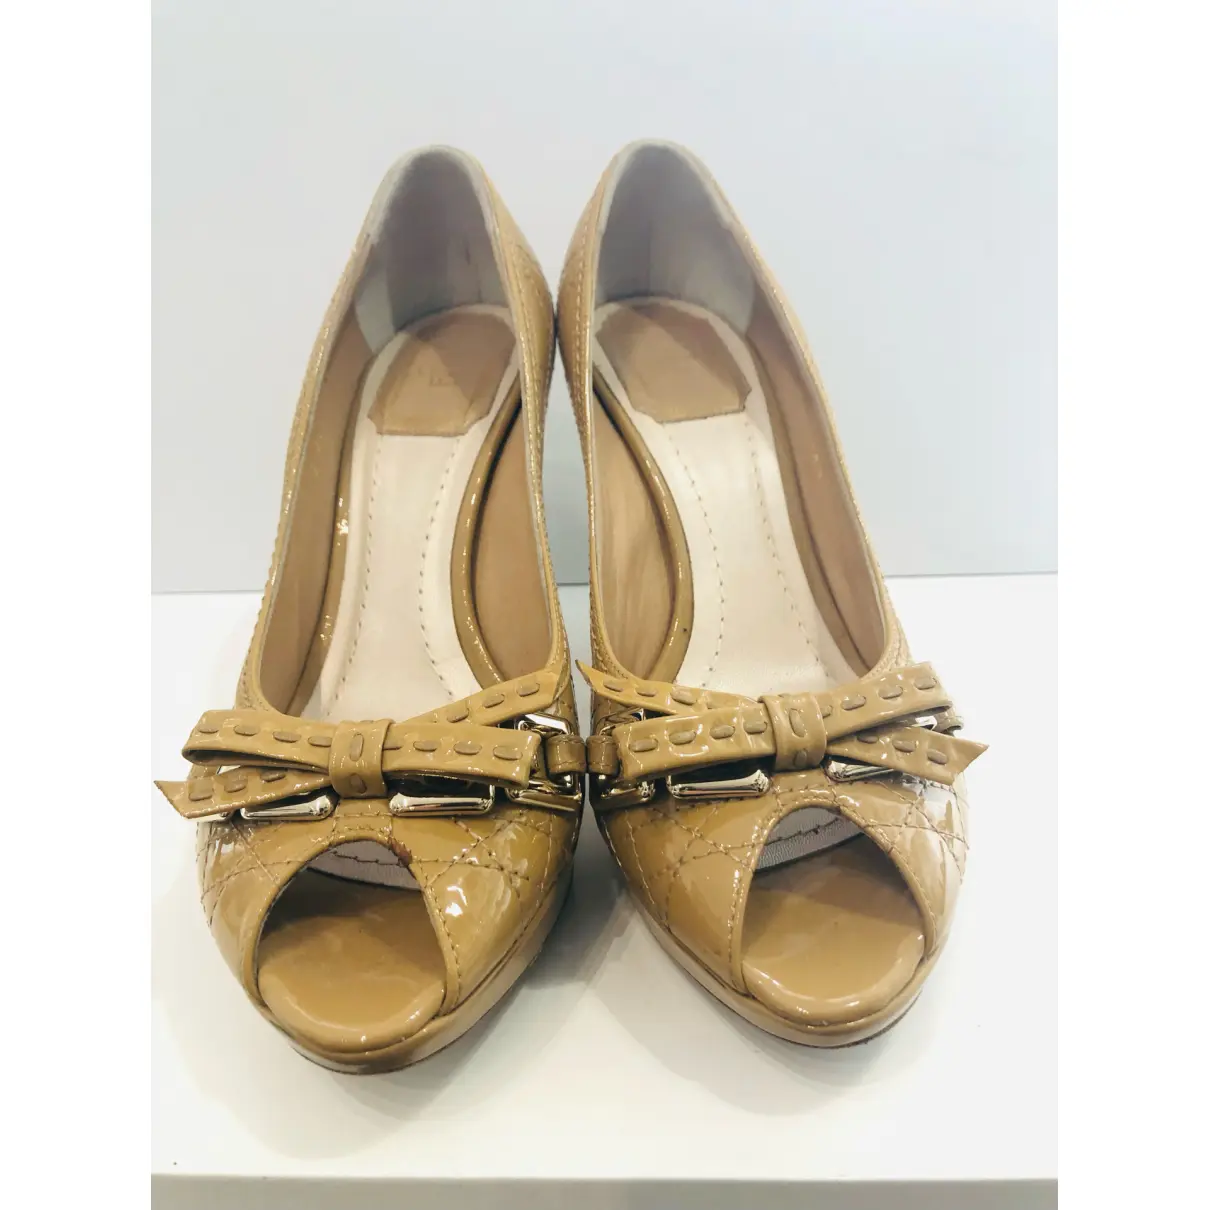 Buy Dior Miss Dior Peep Toes patent leather heels online